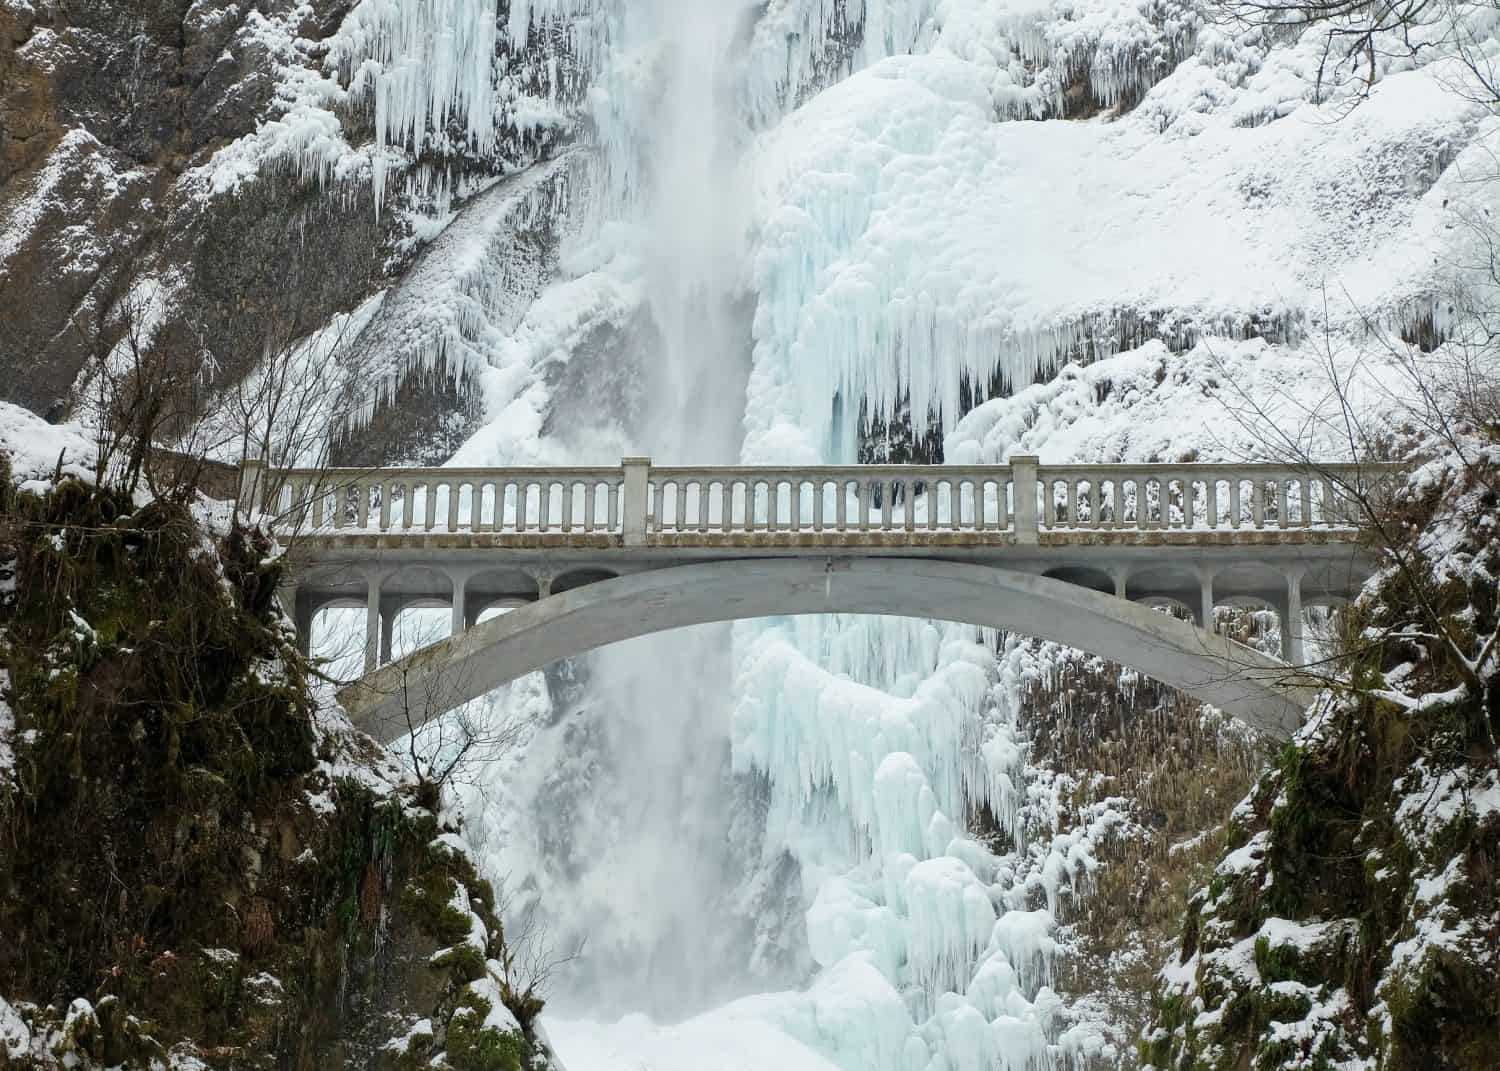 The Icy Cascades of Multnomah Falls in Winter. Portland, Oregon